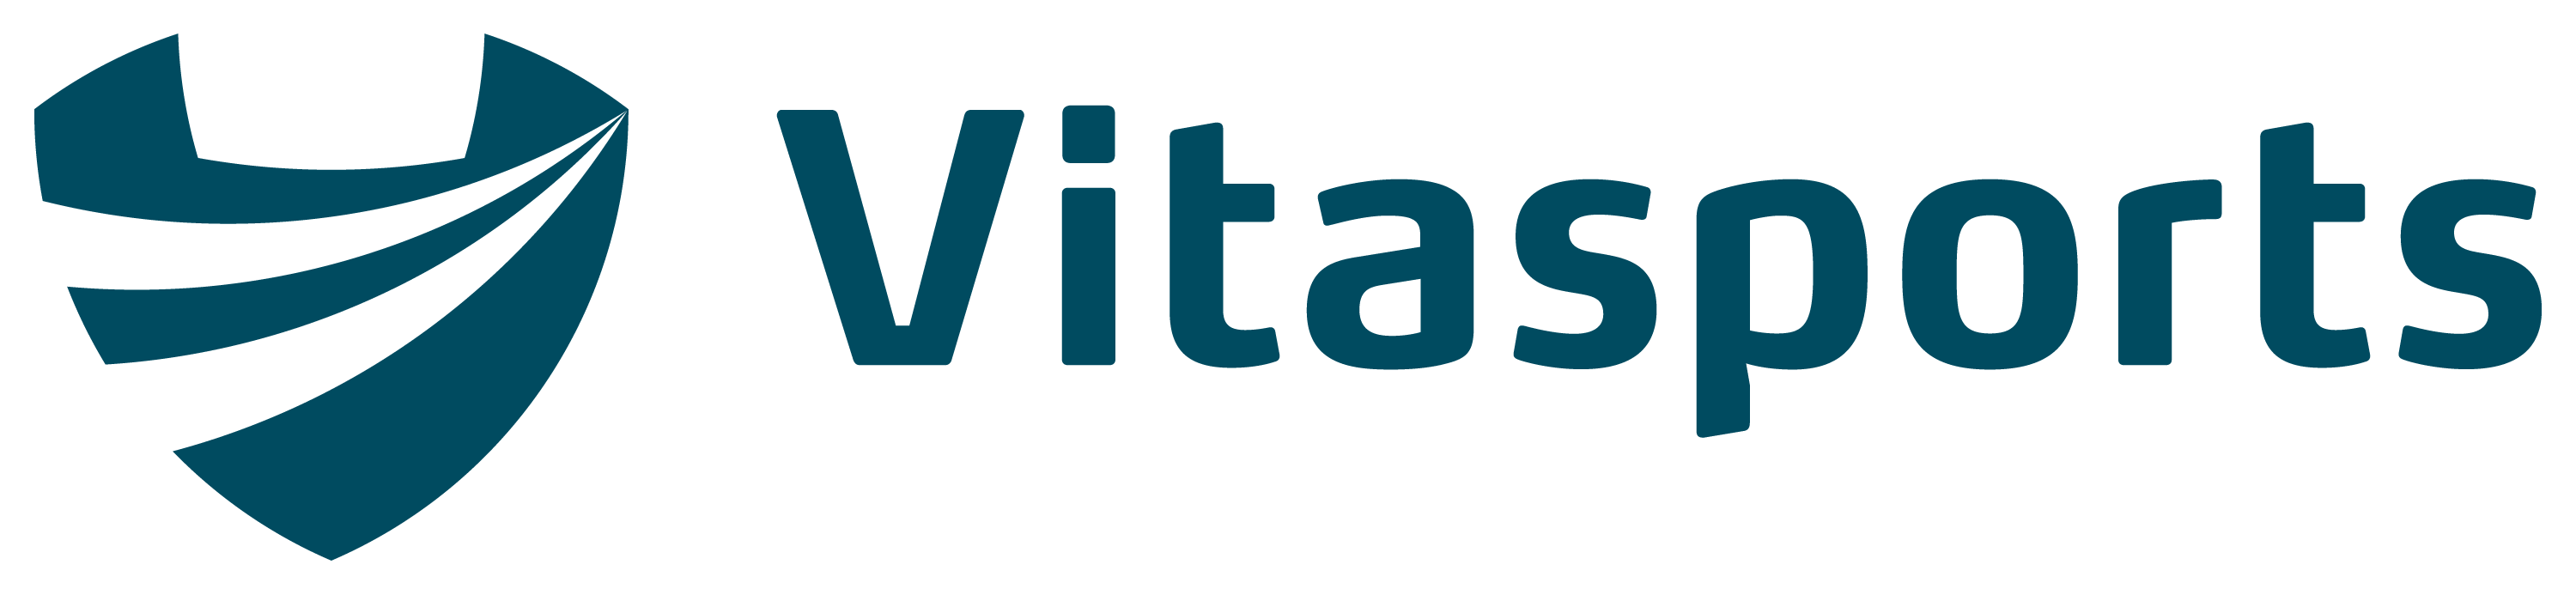 Vitasports Corporate Logo